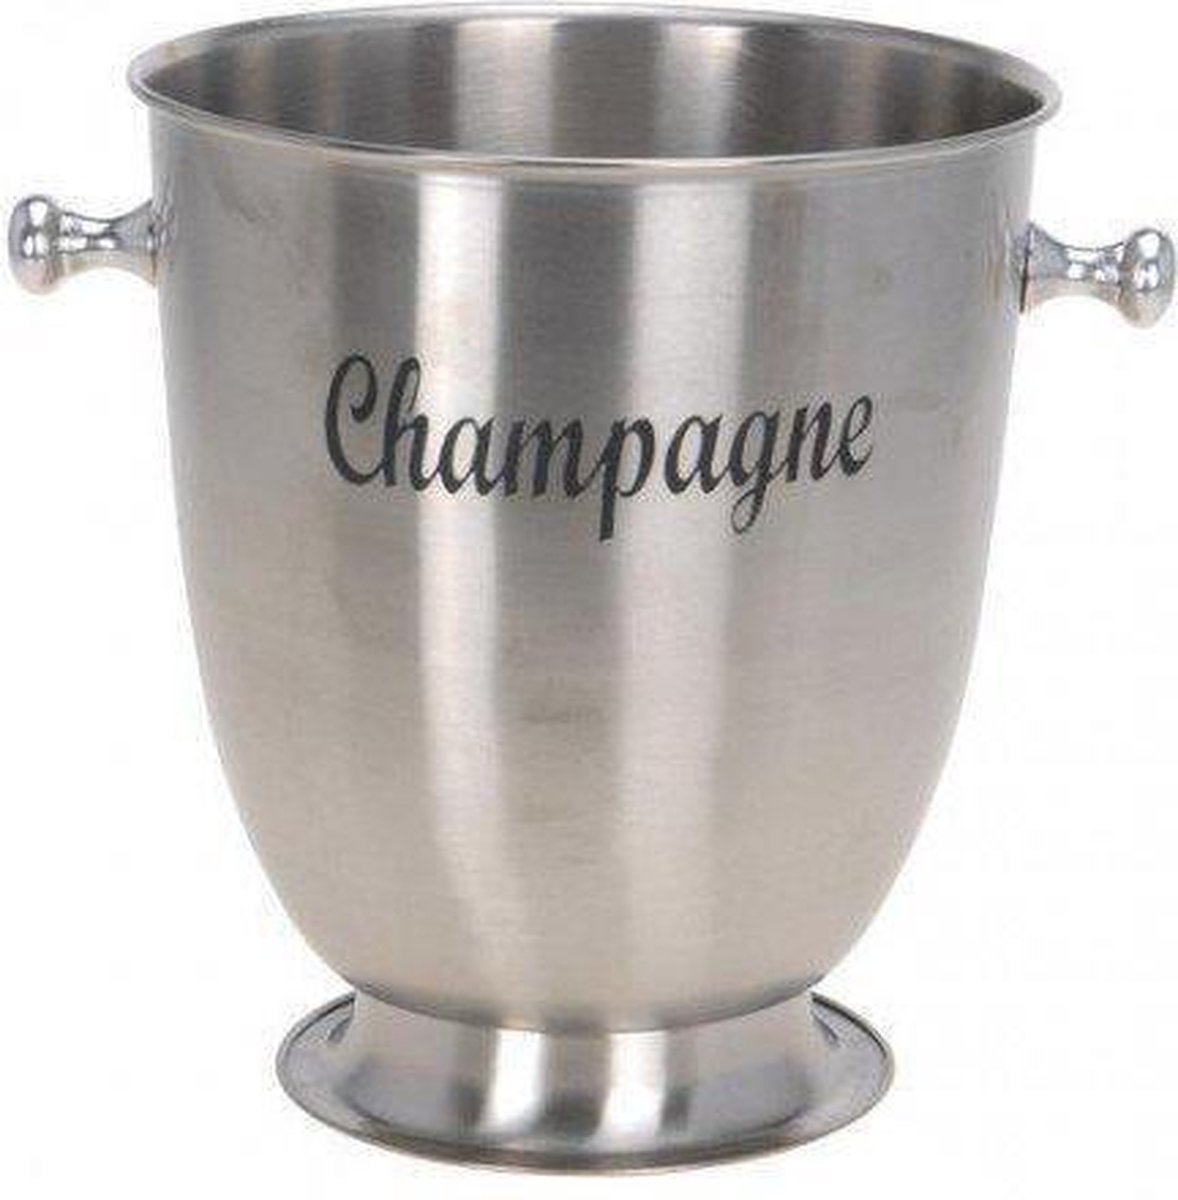 Champagnekoeler bol.com